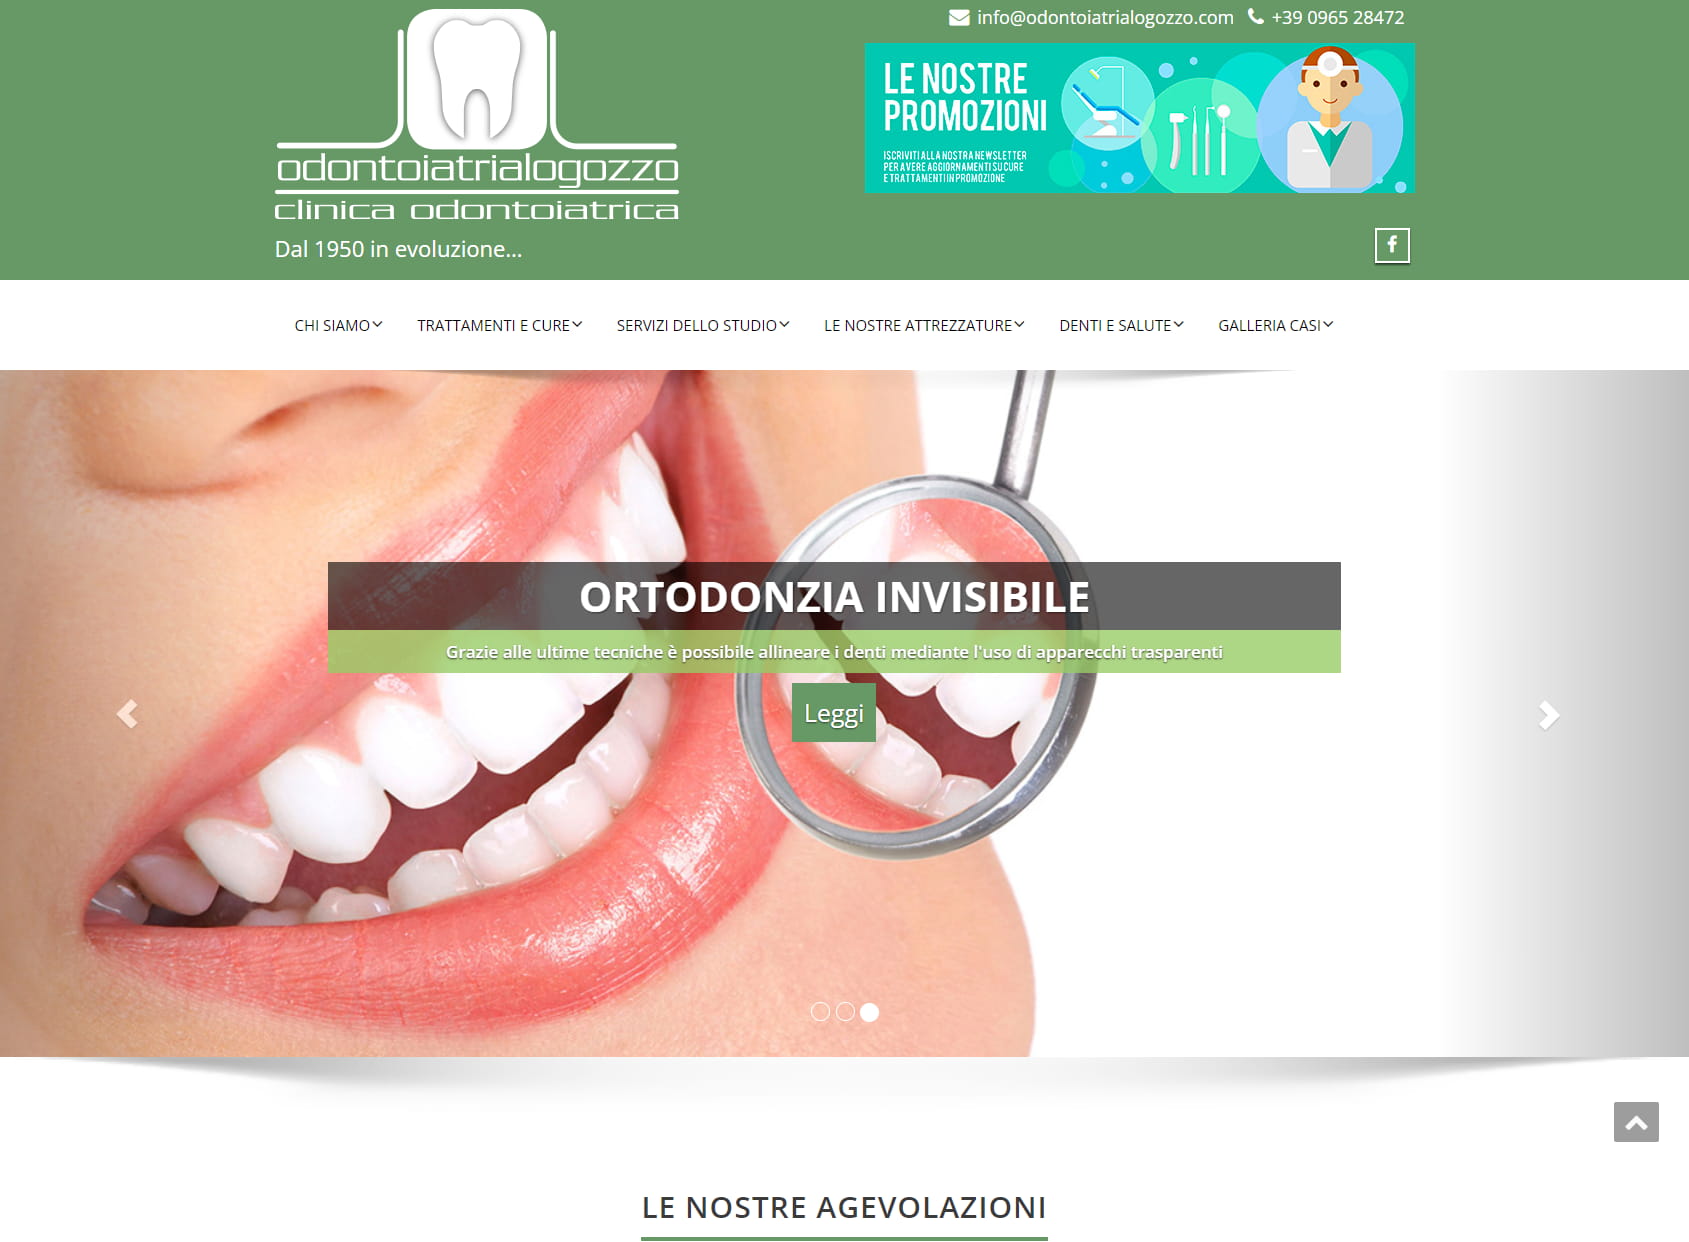 Clinica Odontoiatrica Logozzo